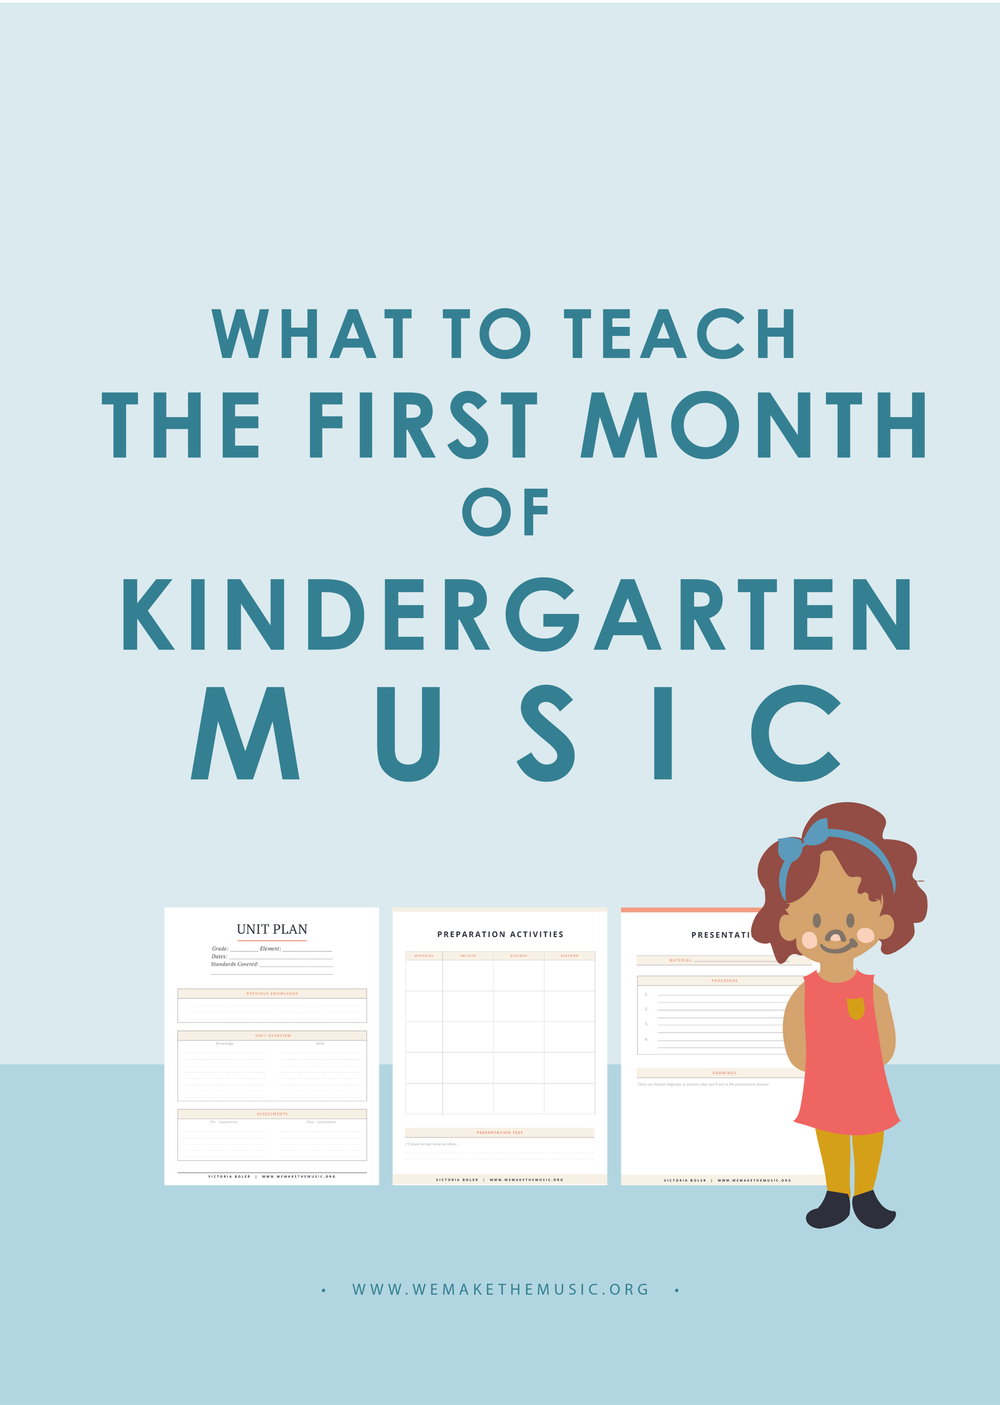 What to Teach The First Month of Kindergarten Music_9-26 Kindergarten Music.png